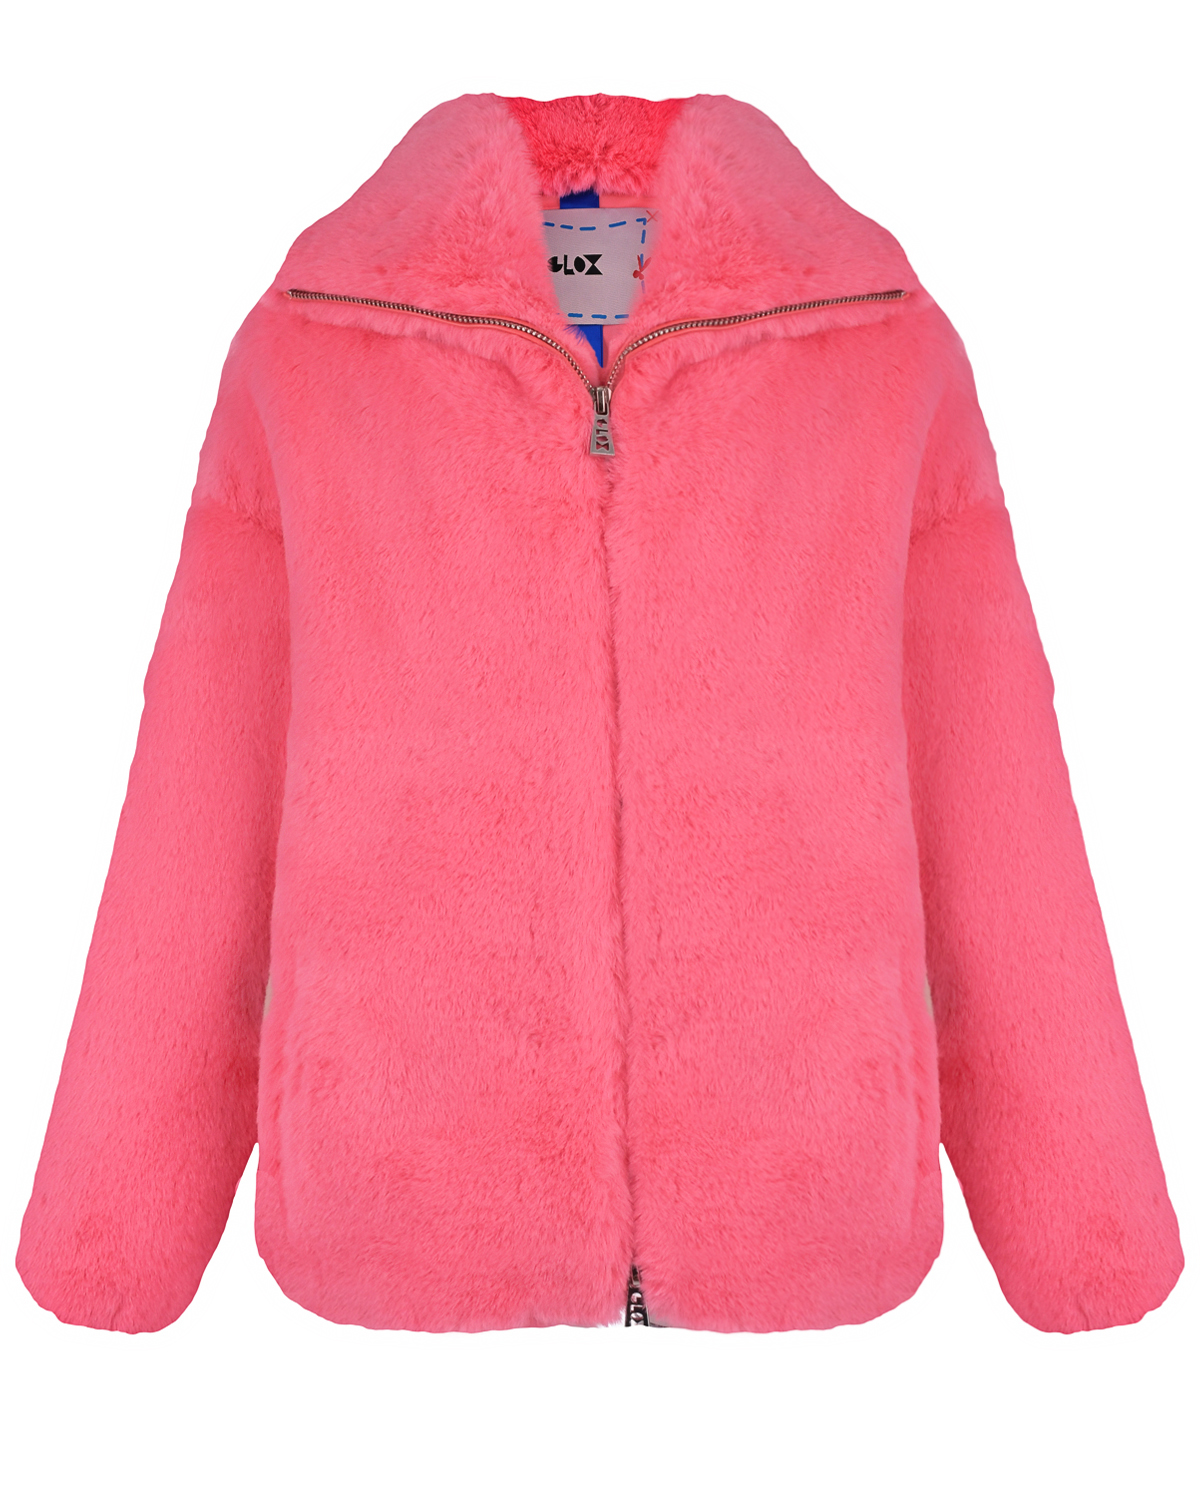 Розовая куртка из эко-меха Glox, размер 40, цвет розовый